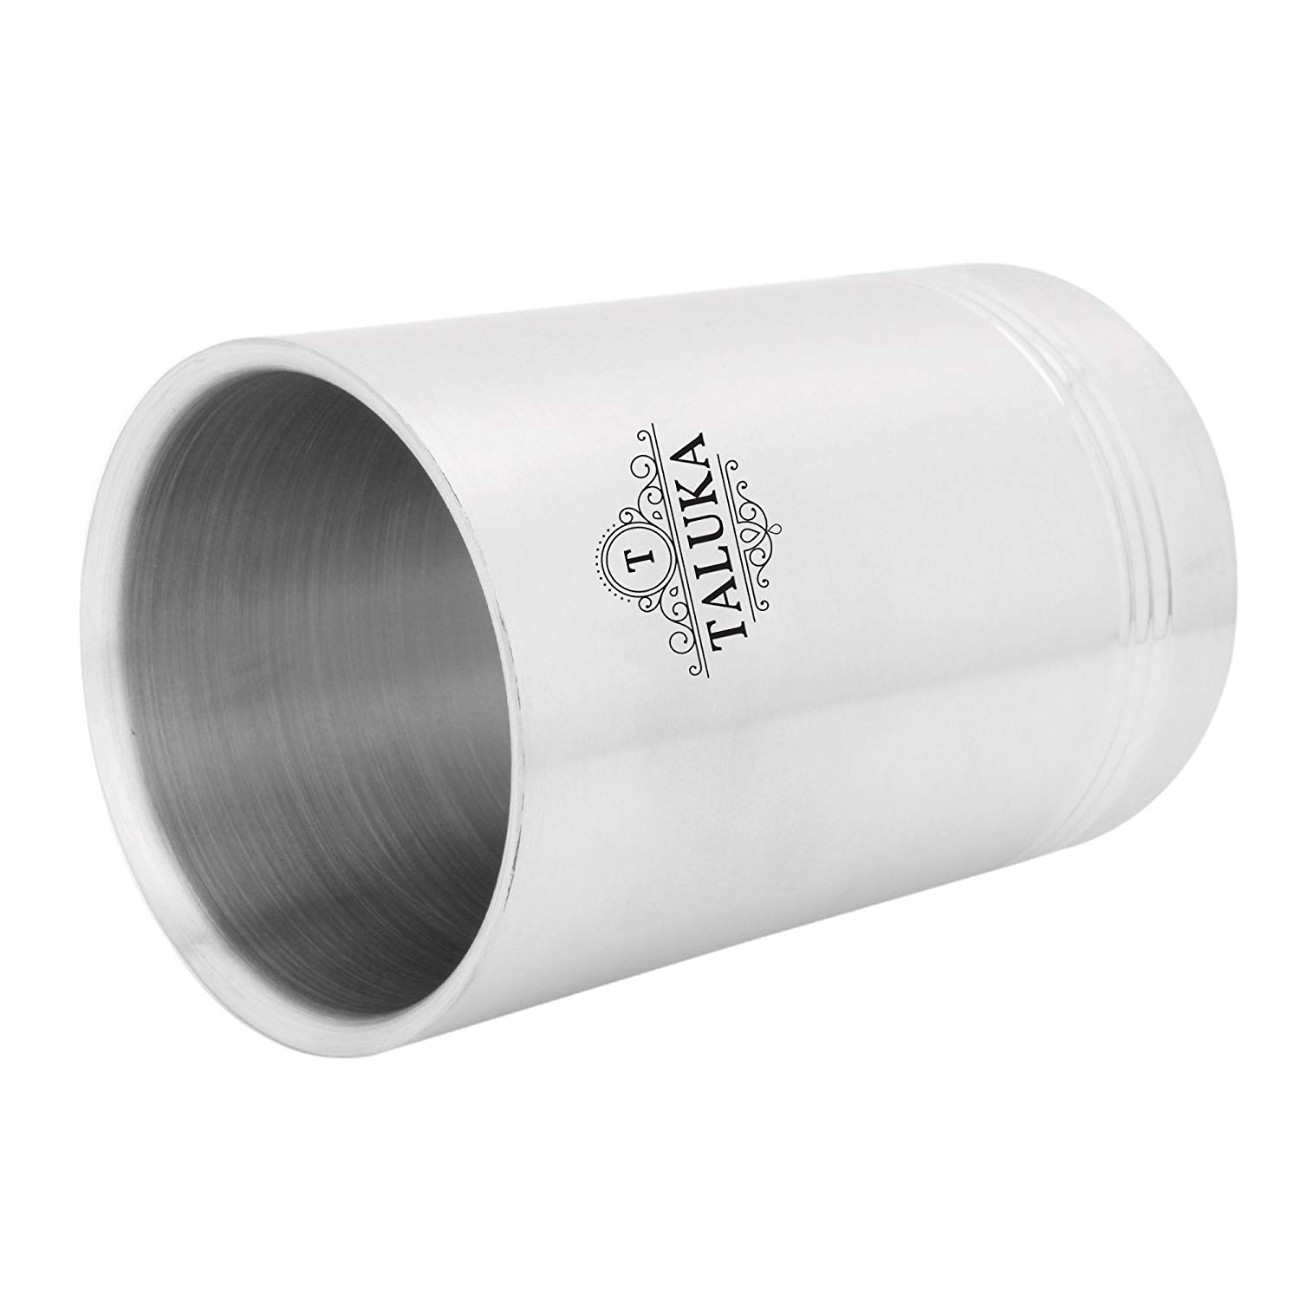 Stainless Steel Bottom Ring Wine Cooler For Bar Ware Restaurant Home Gift Purpose